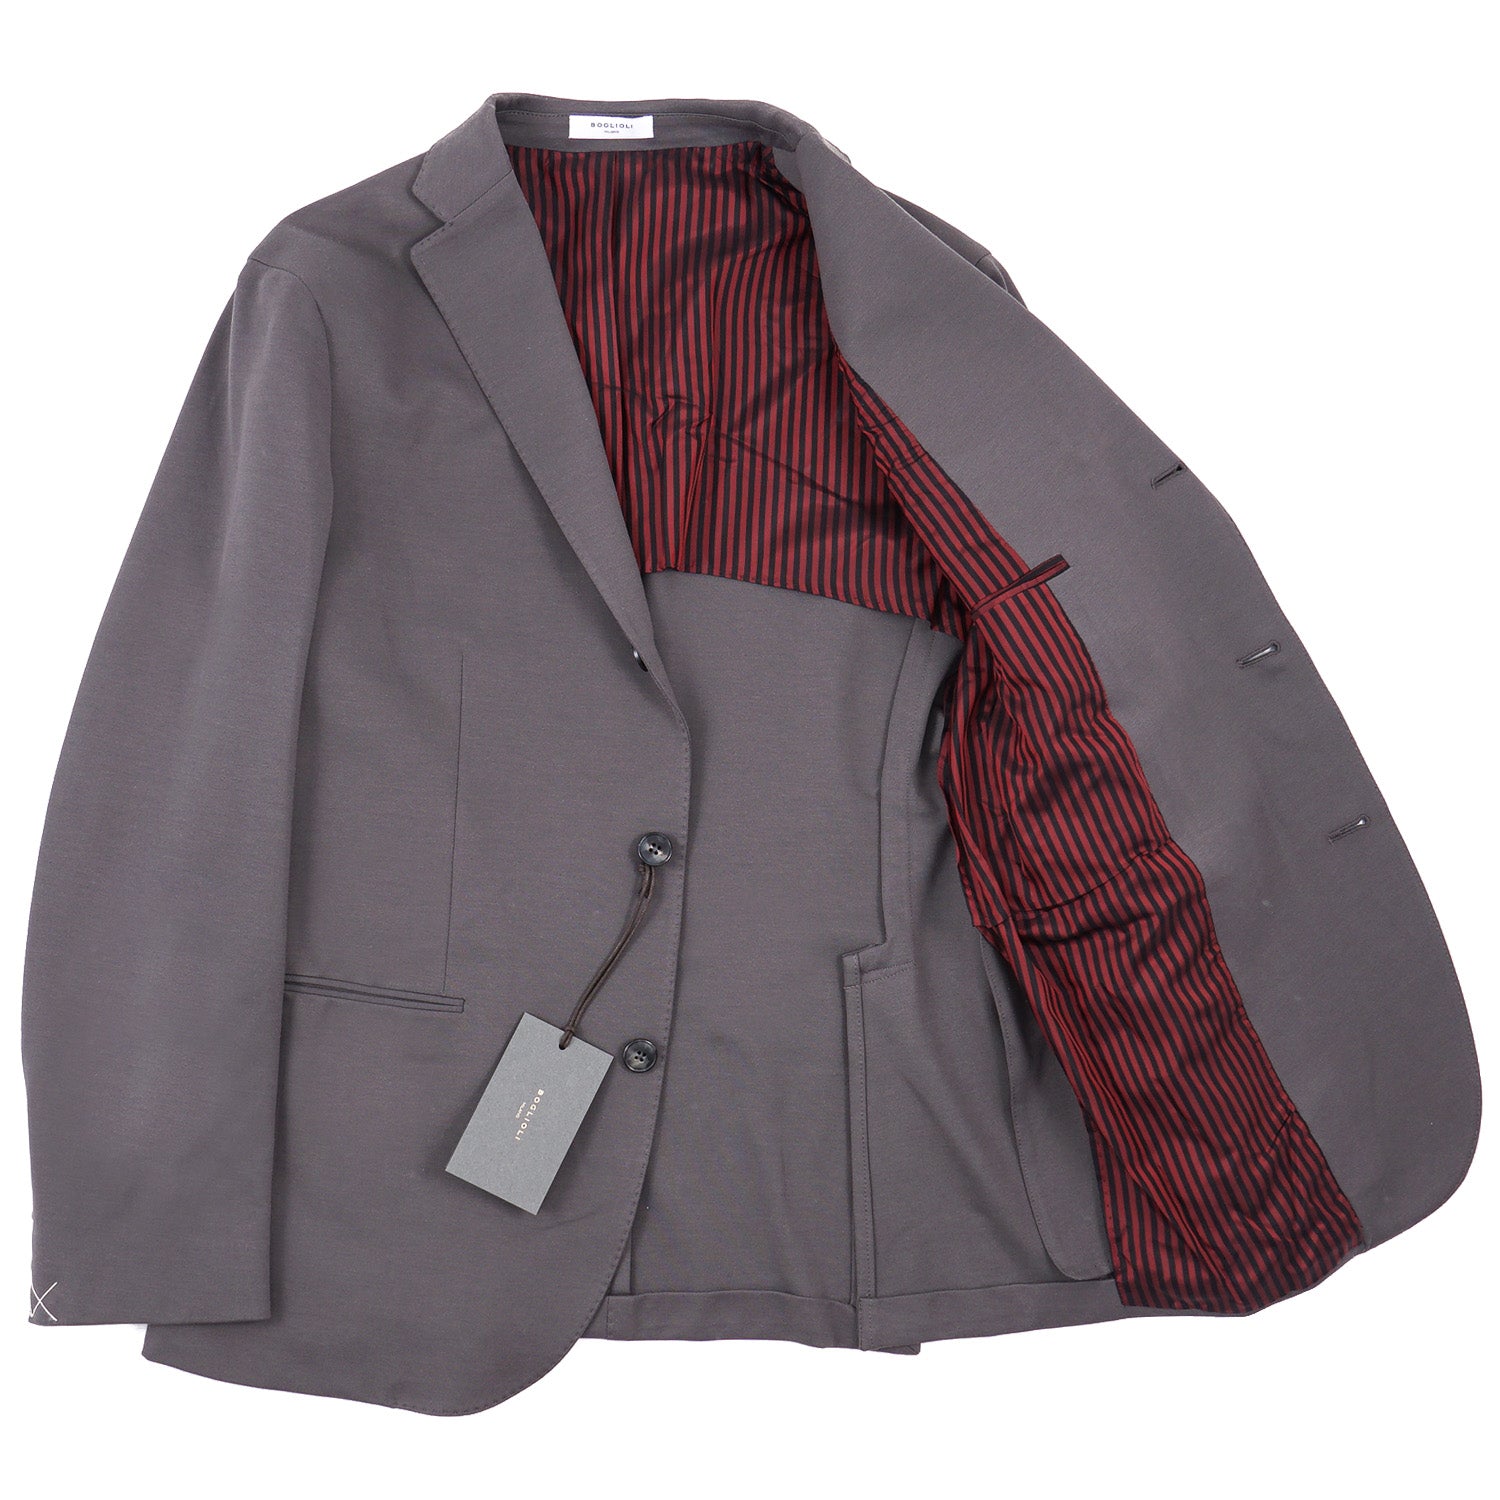 Boglioli Knit Jersey 'K Jacket' Suit - Top Shelf Apparel